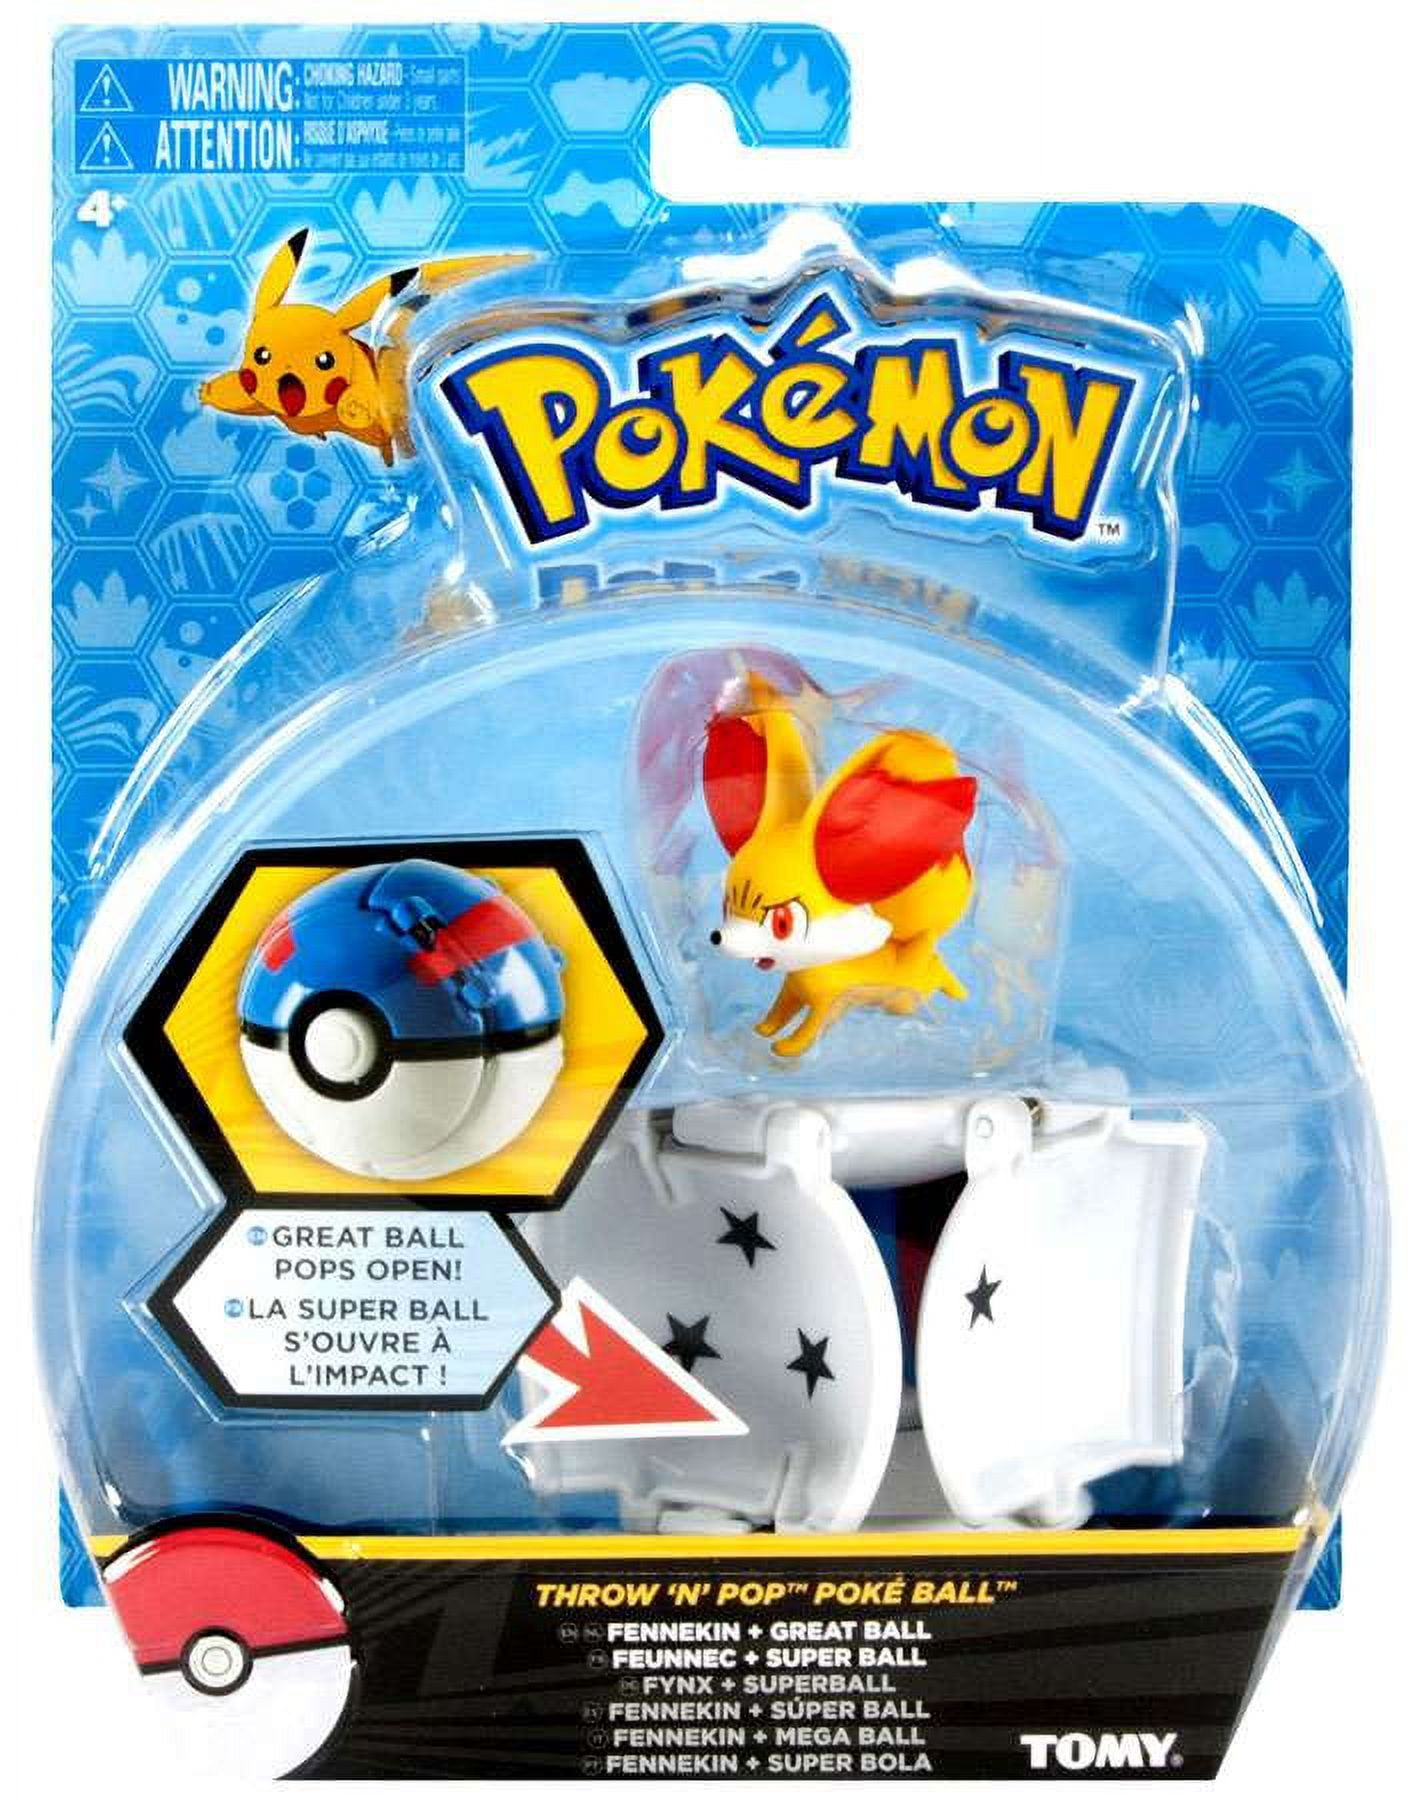 Pokémon Throw 'n' pop pokeball pikachu